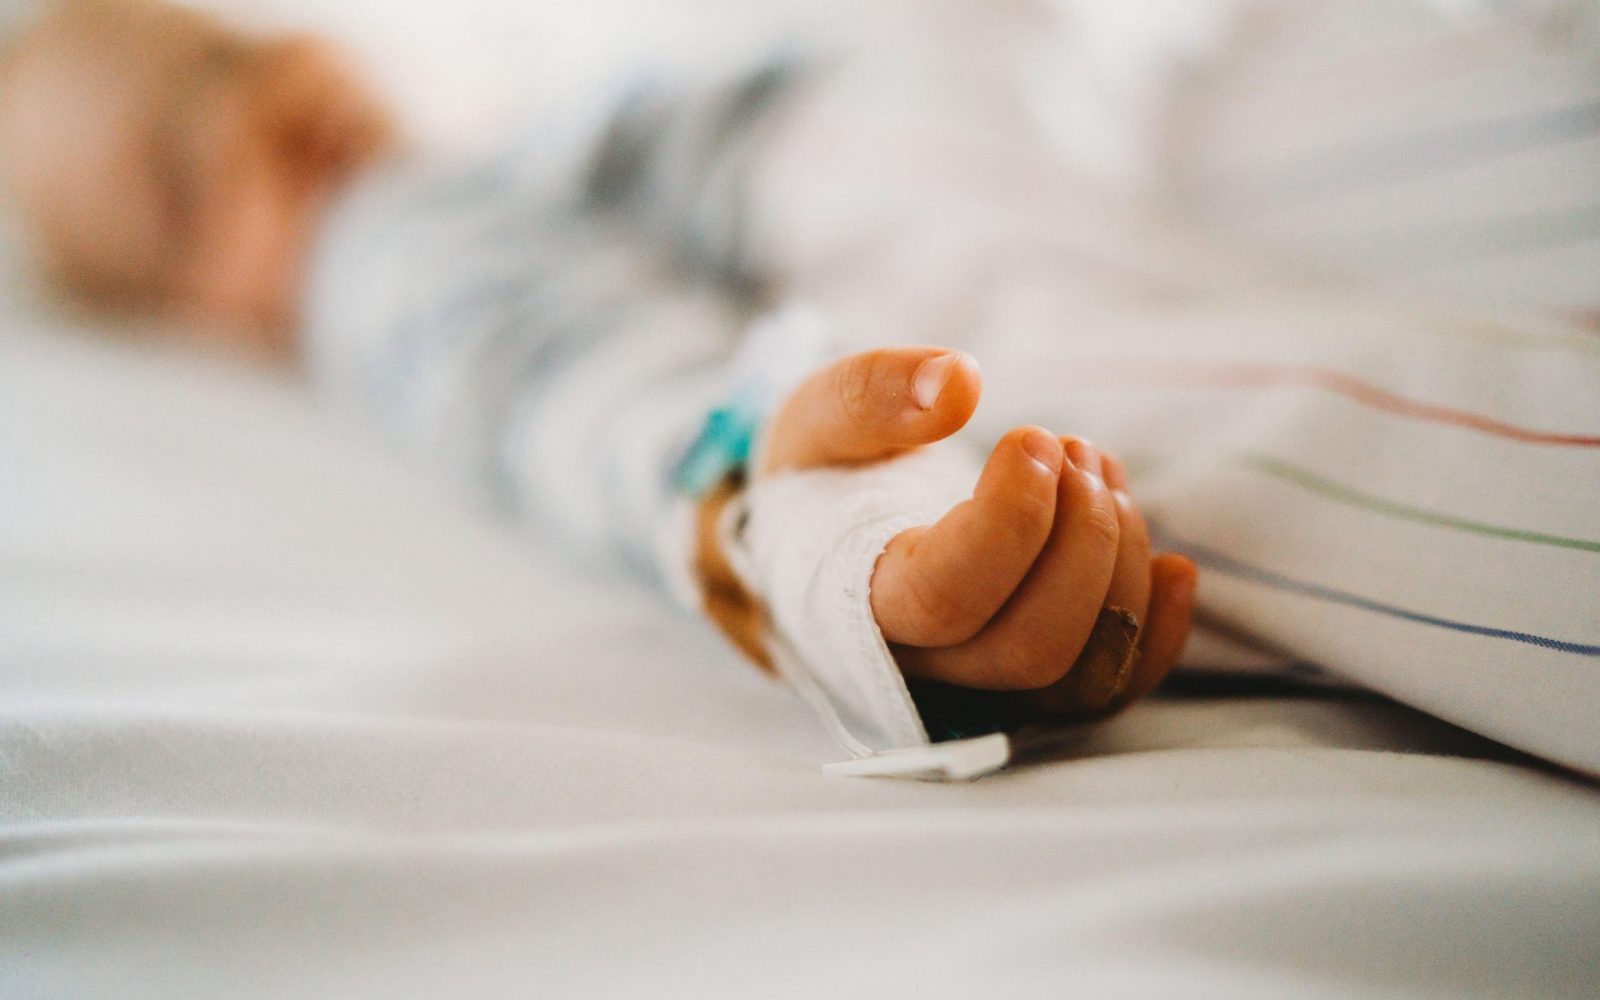 Dojenček roka z IV bolan v bolnišnici z virusom koronavirus